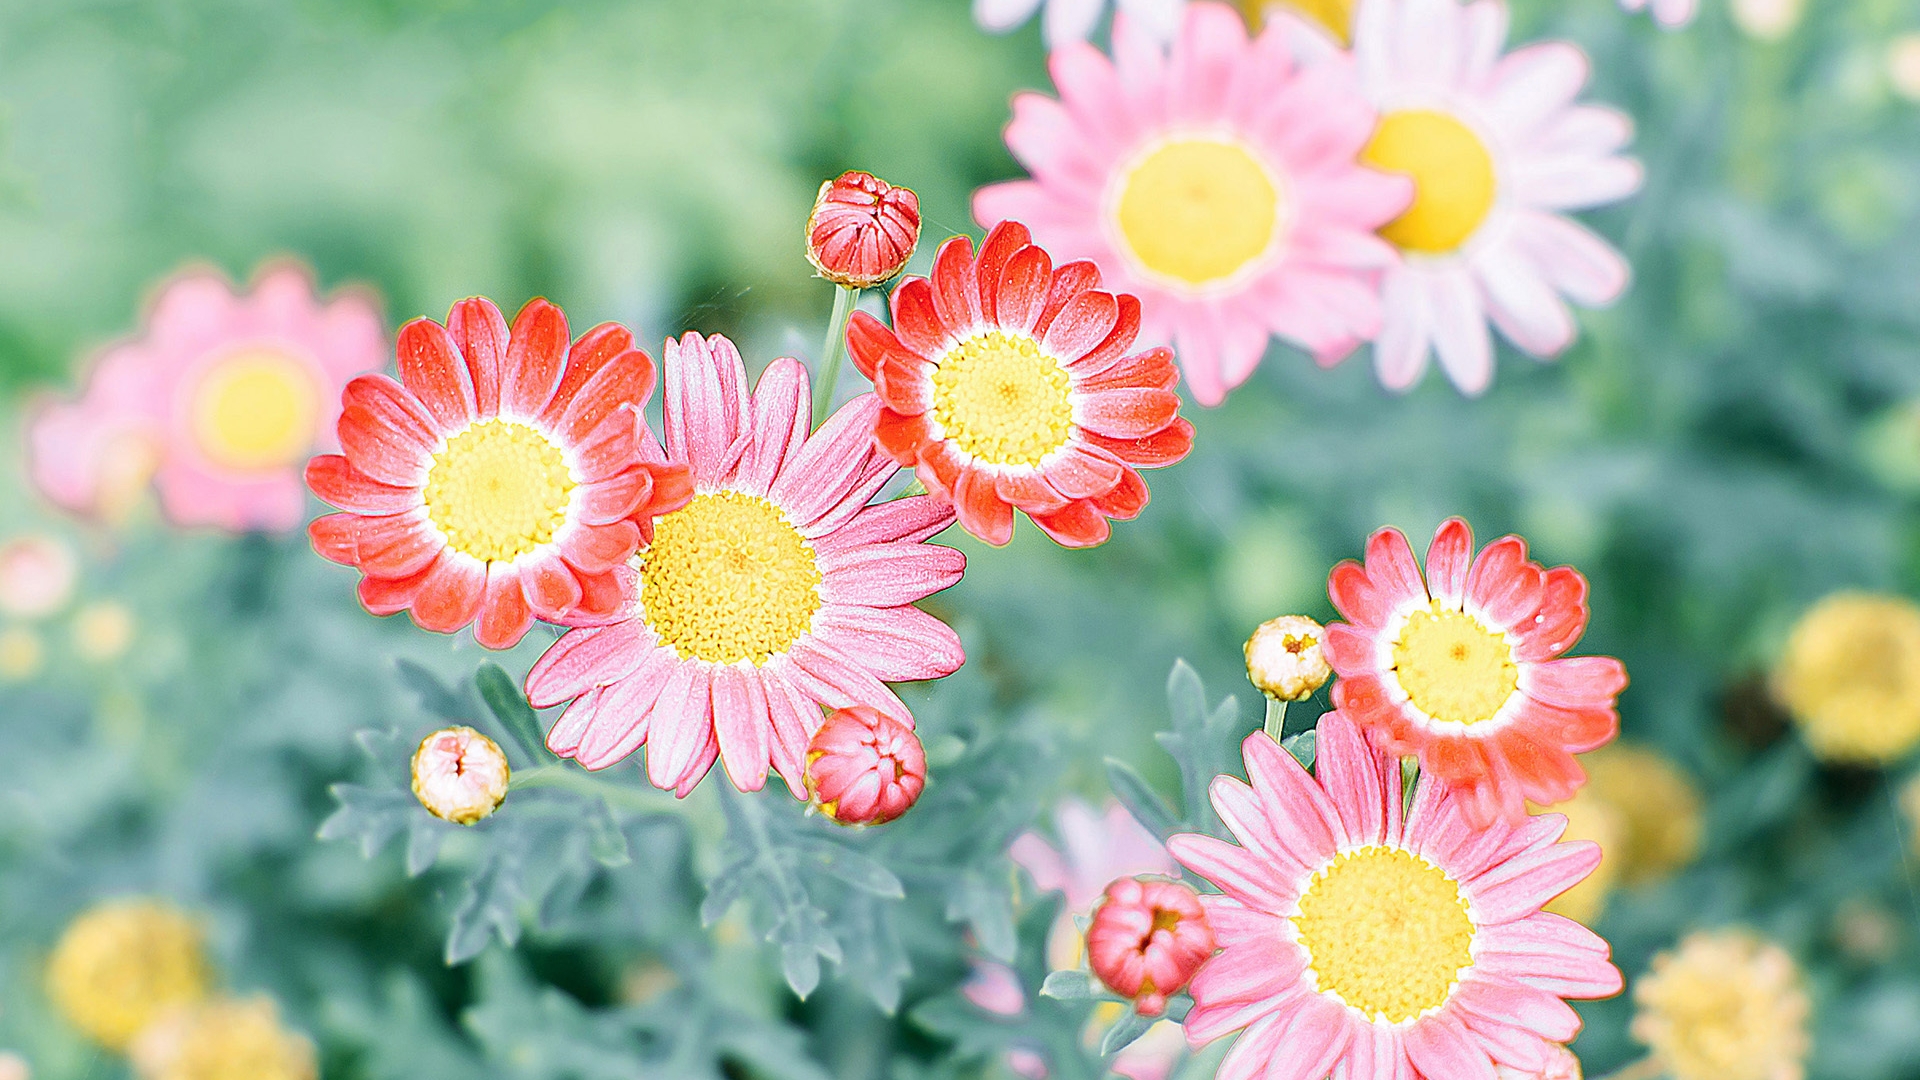 Image: Daisies, flowers, petals